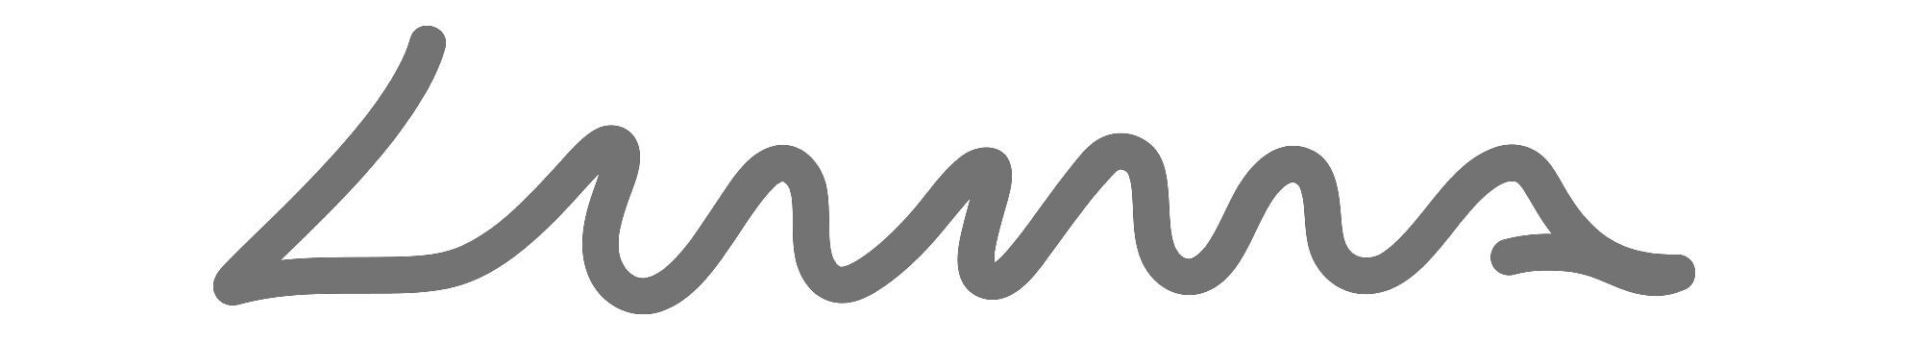 grey luma logo